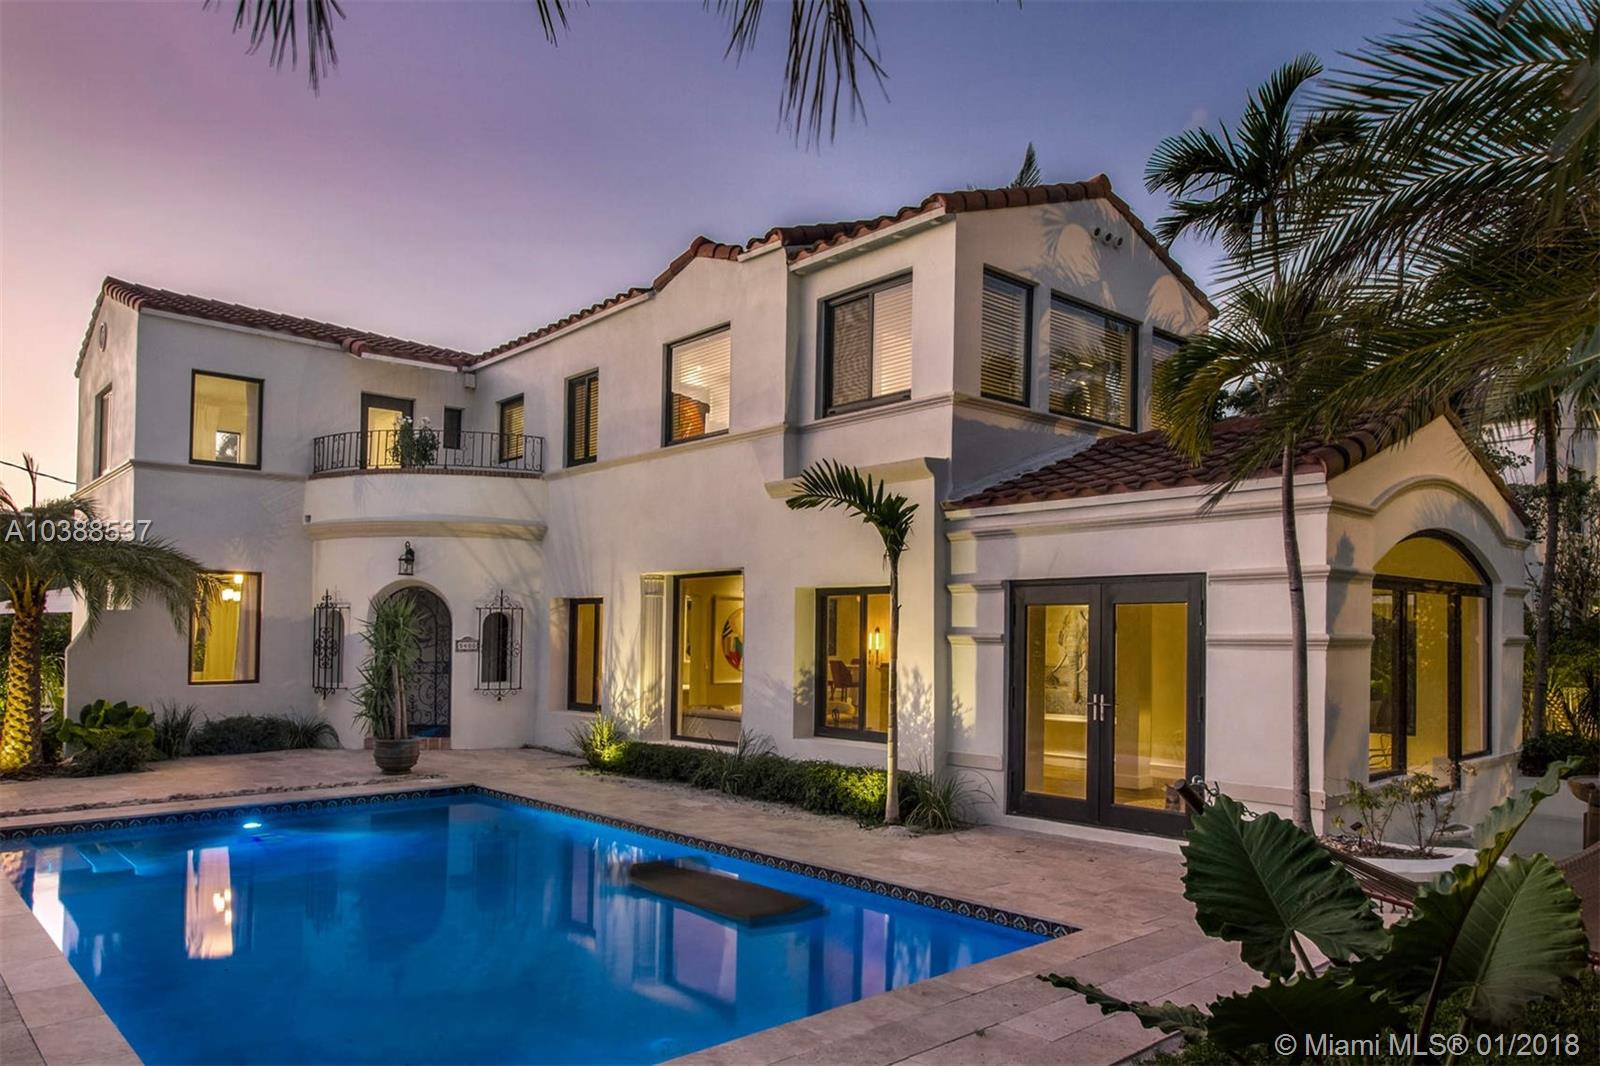 The Best Priced Miami Beach Mediterranean-style Houses